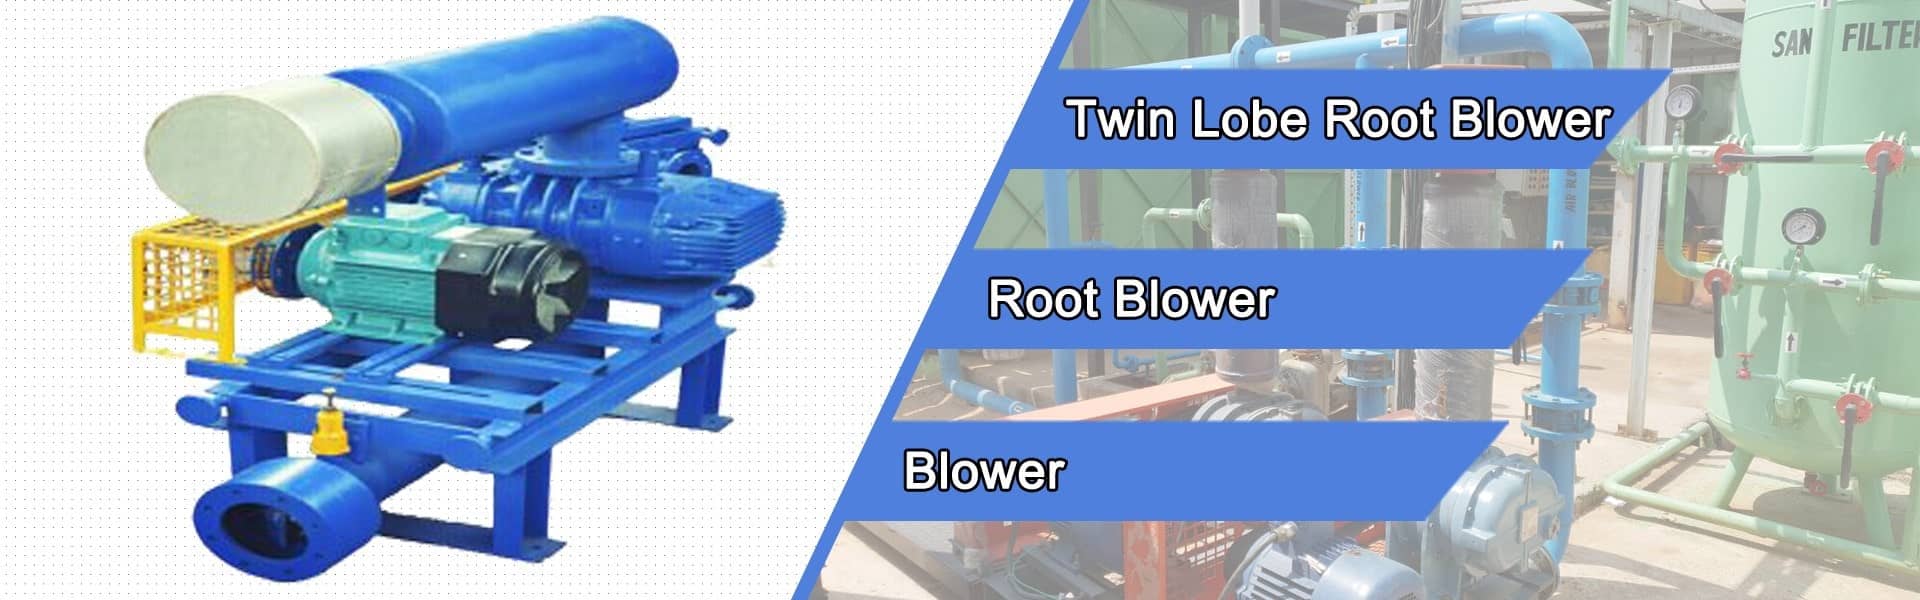 Twin Lobe Root Blower